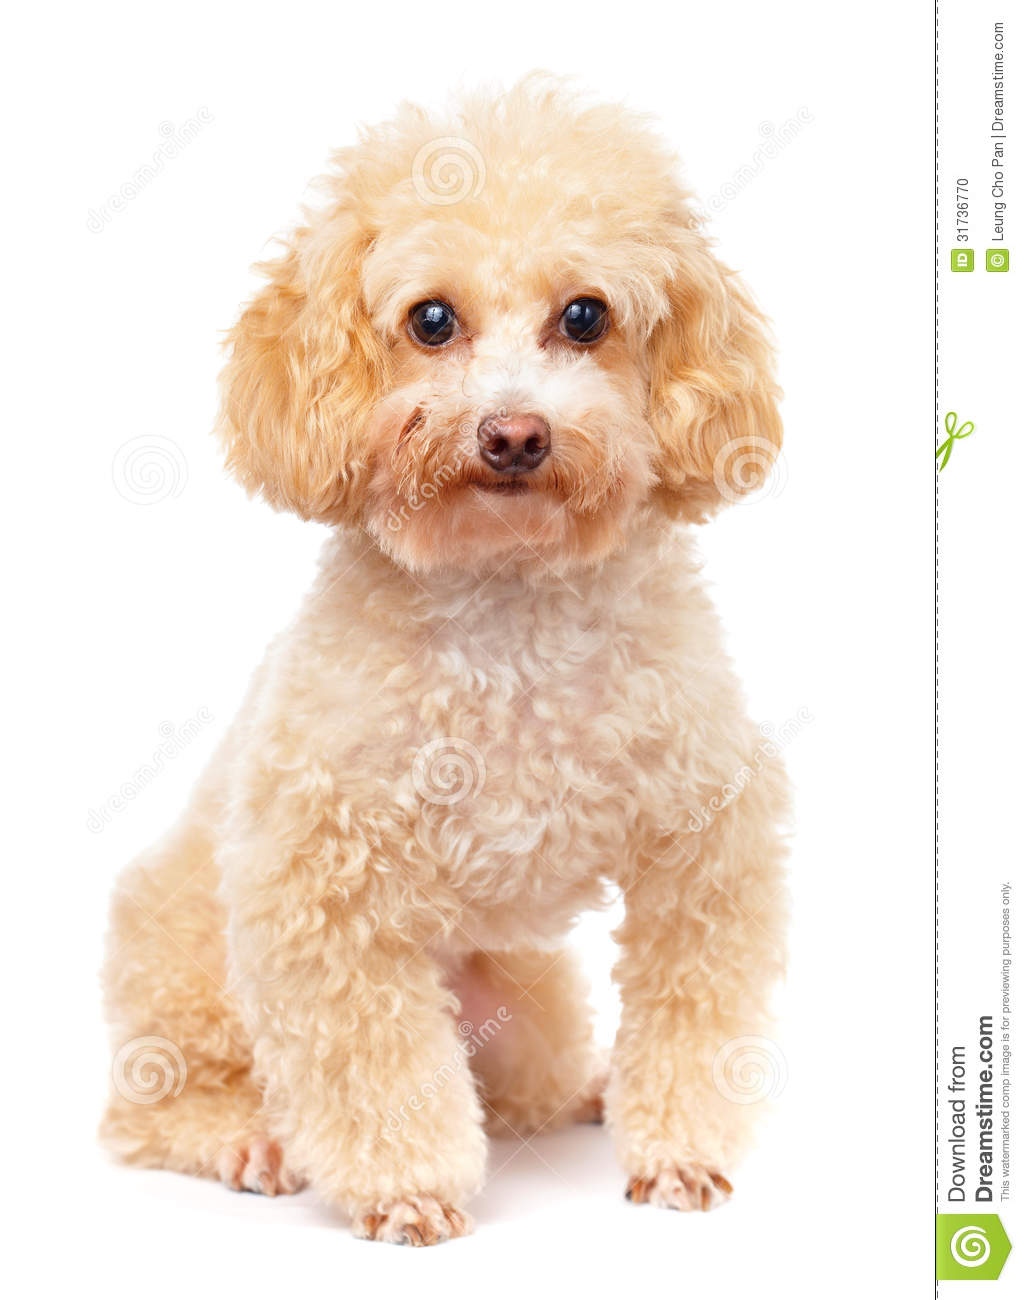 Golden Poodle Dog Picture